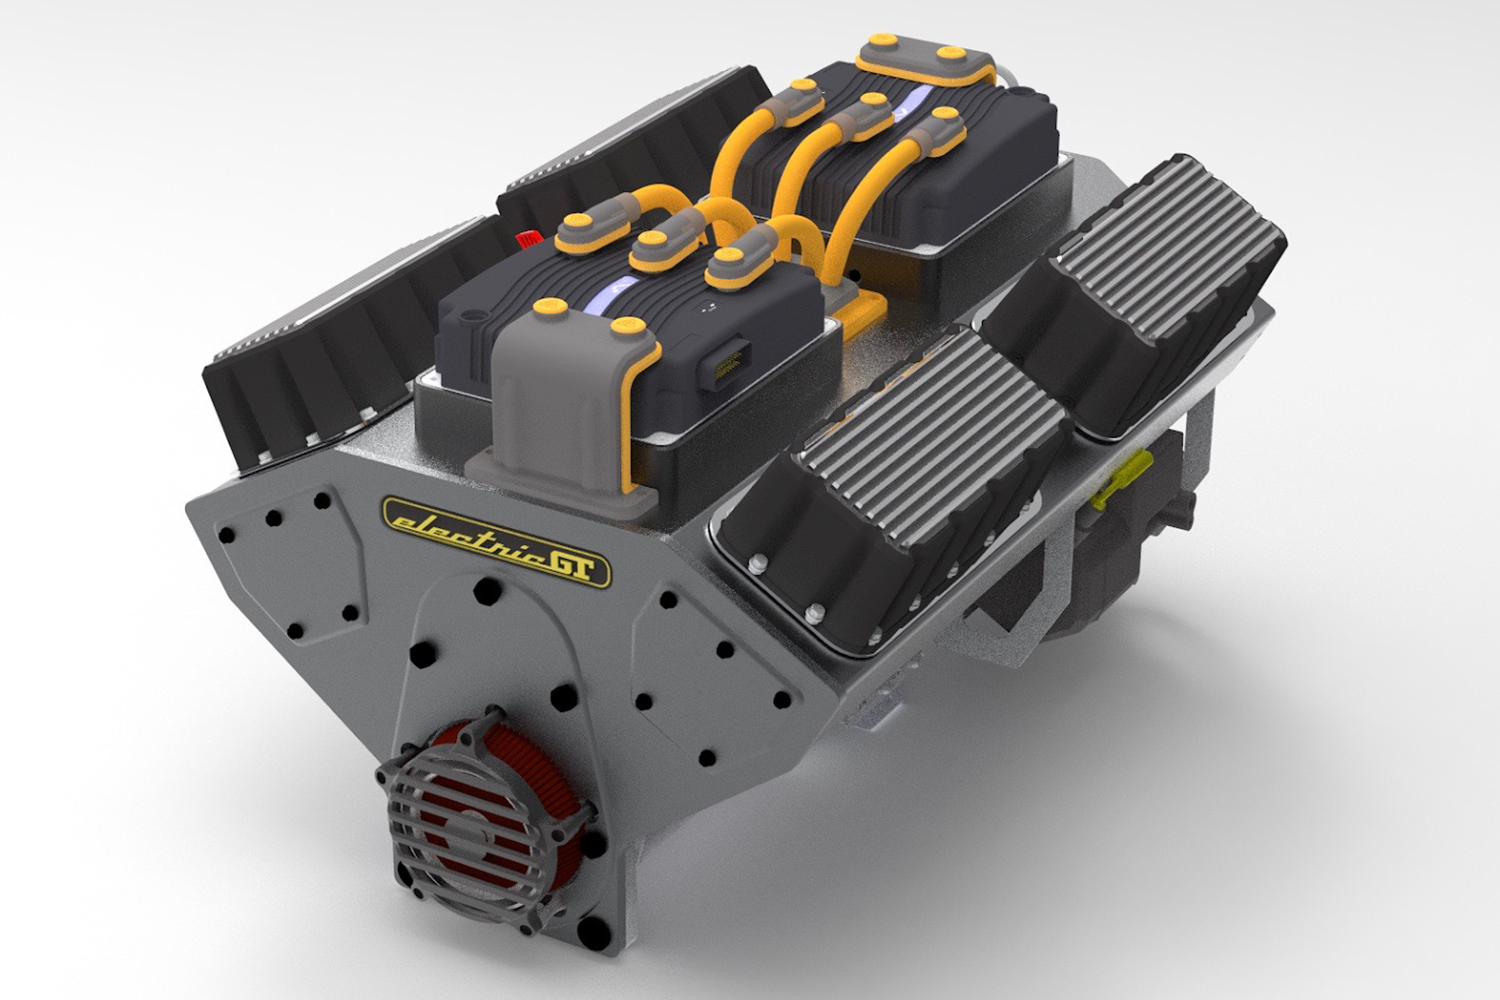 Electric GT EV crate motor conversion